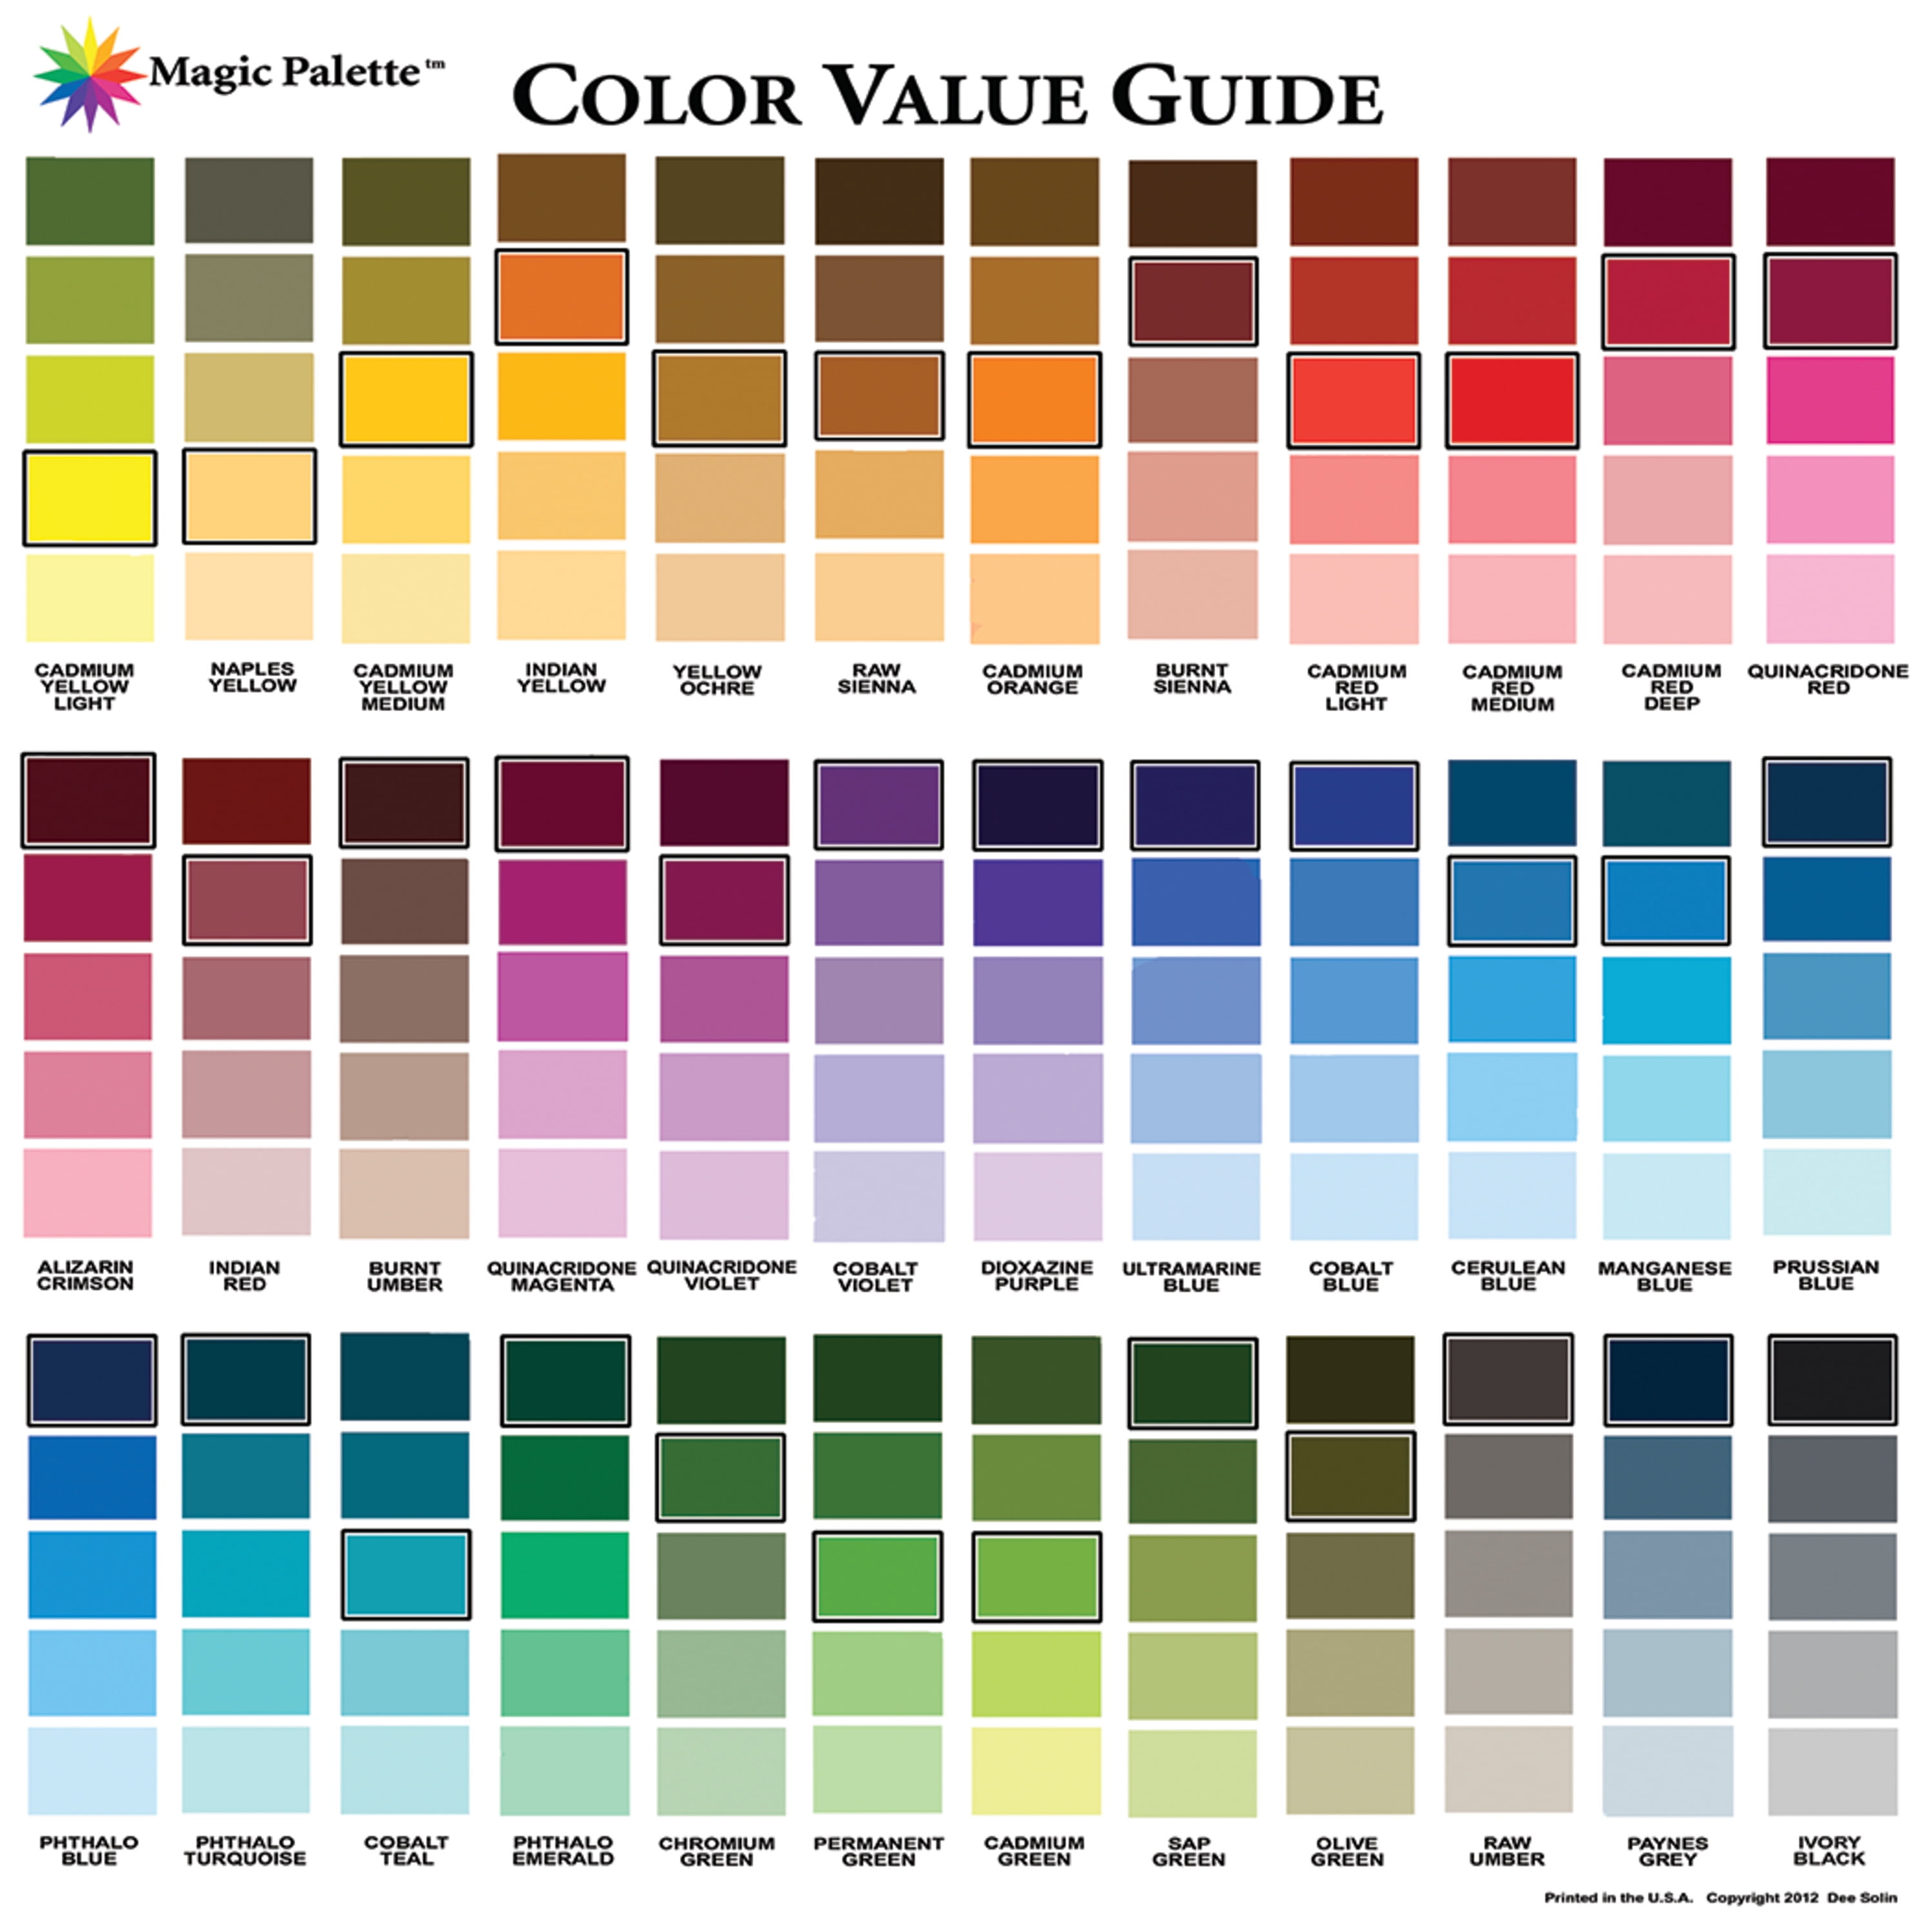 Magic Palette Artist's Color Value Guide - Walmart.com - Walmart.com